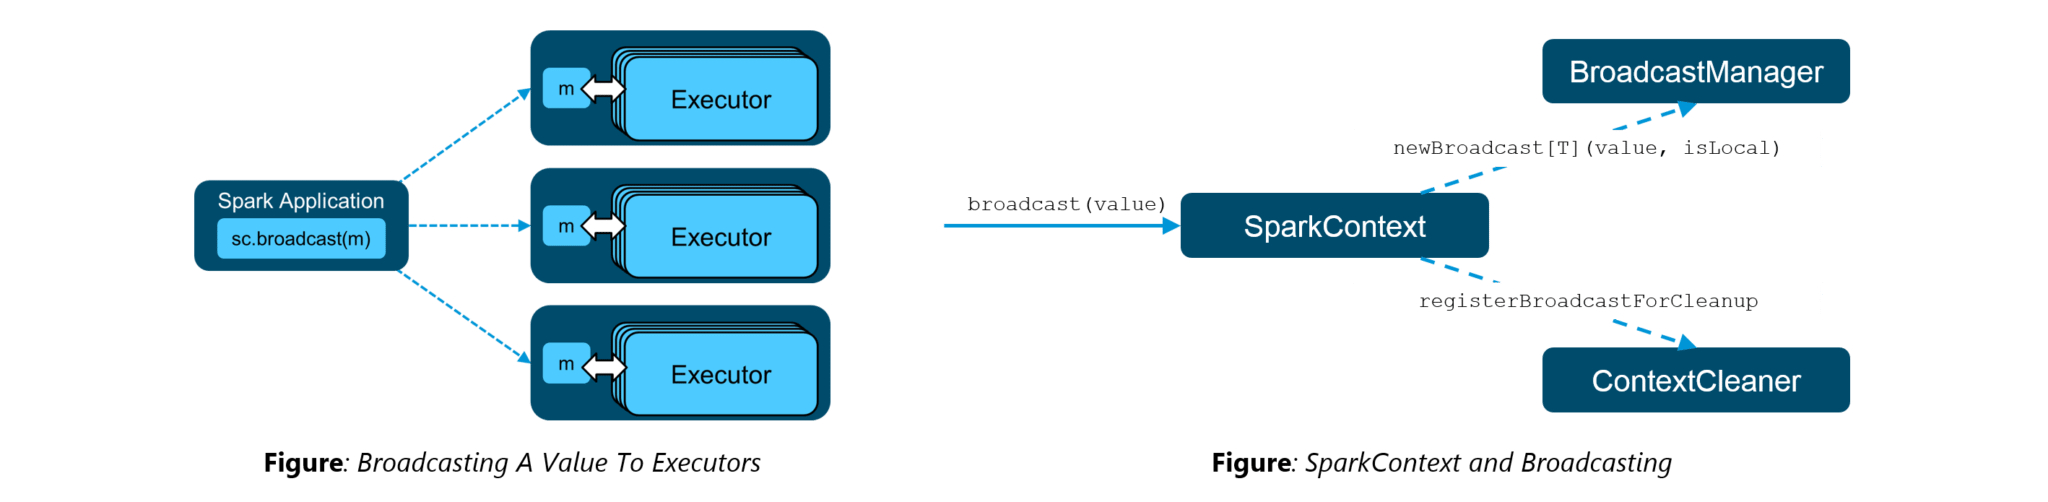 Broadcast Variables - Spark Interview Questions - Edureka